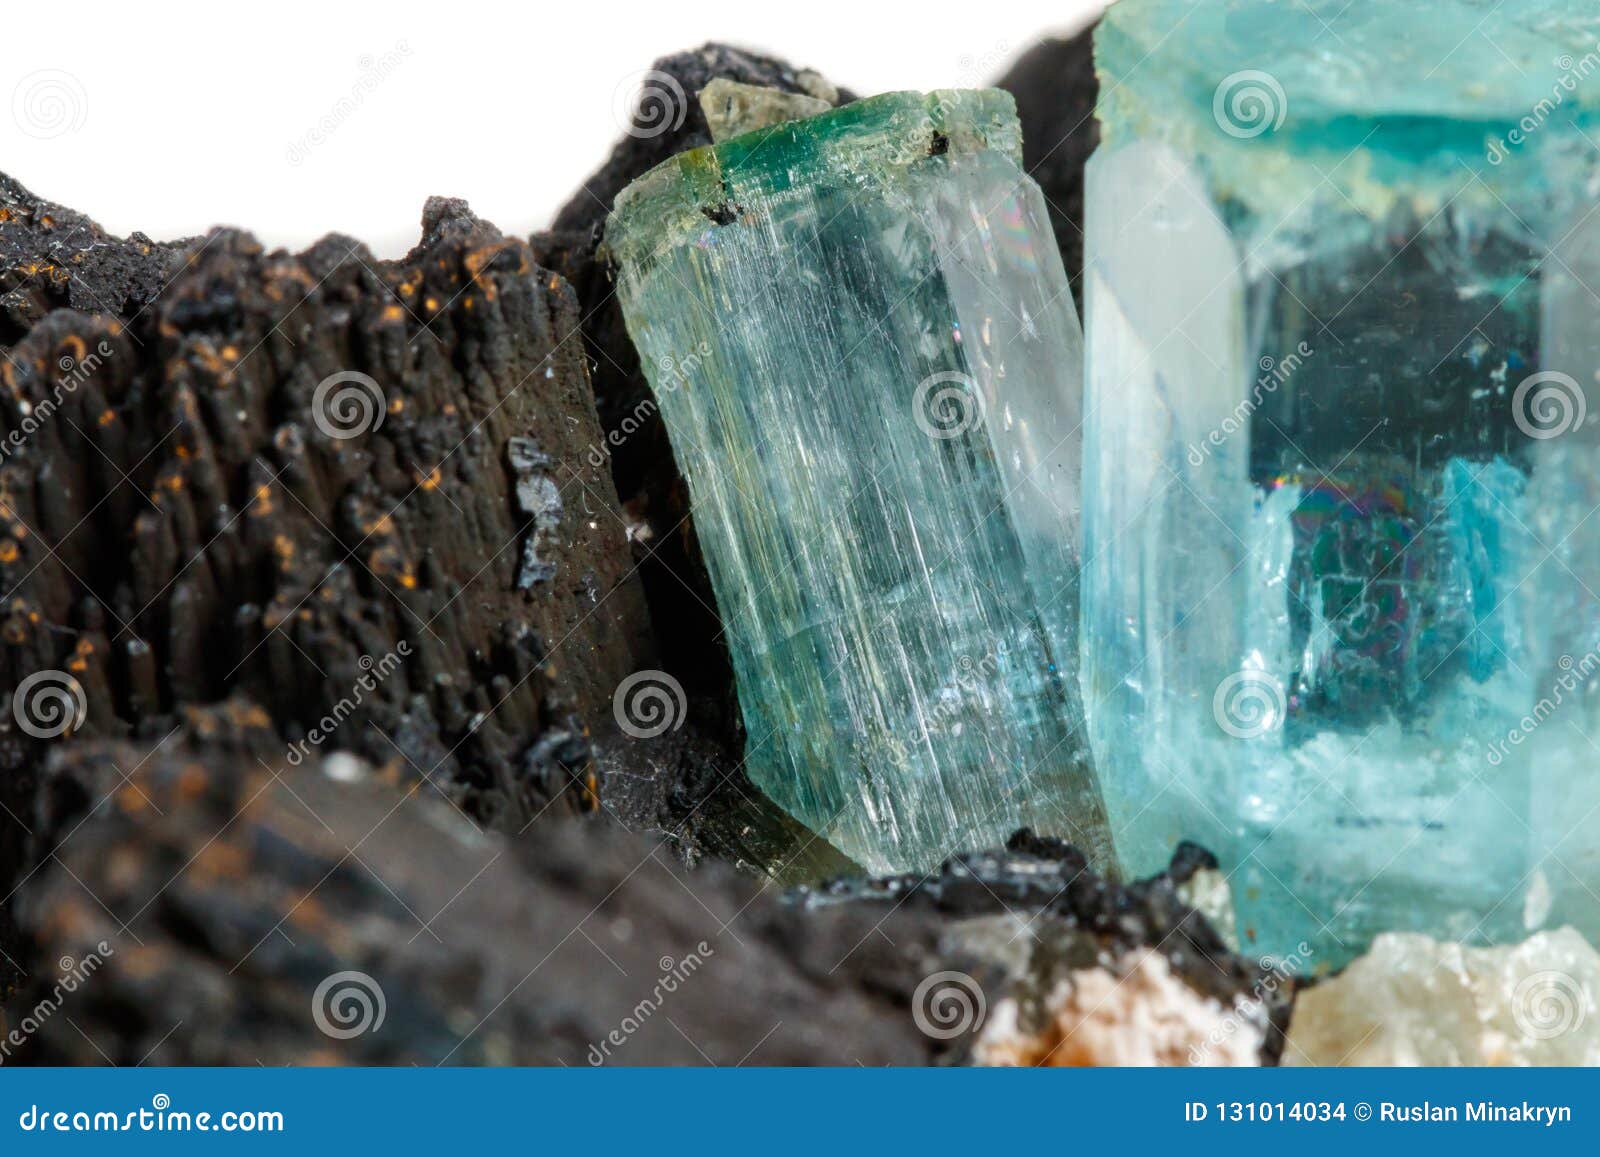 macro mineral stone aquamarine and black tourmaline, schorl on a